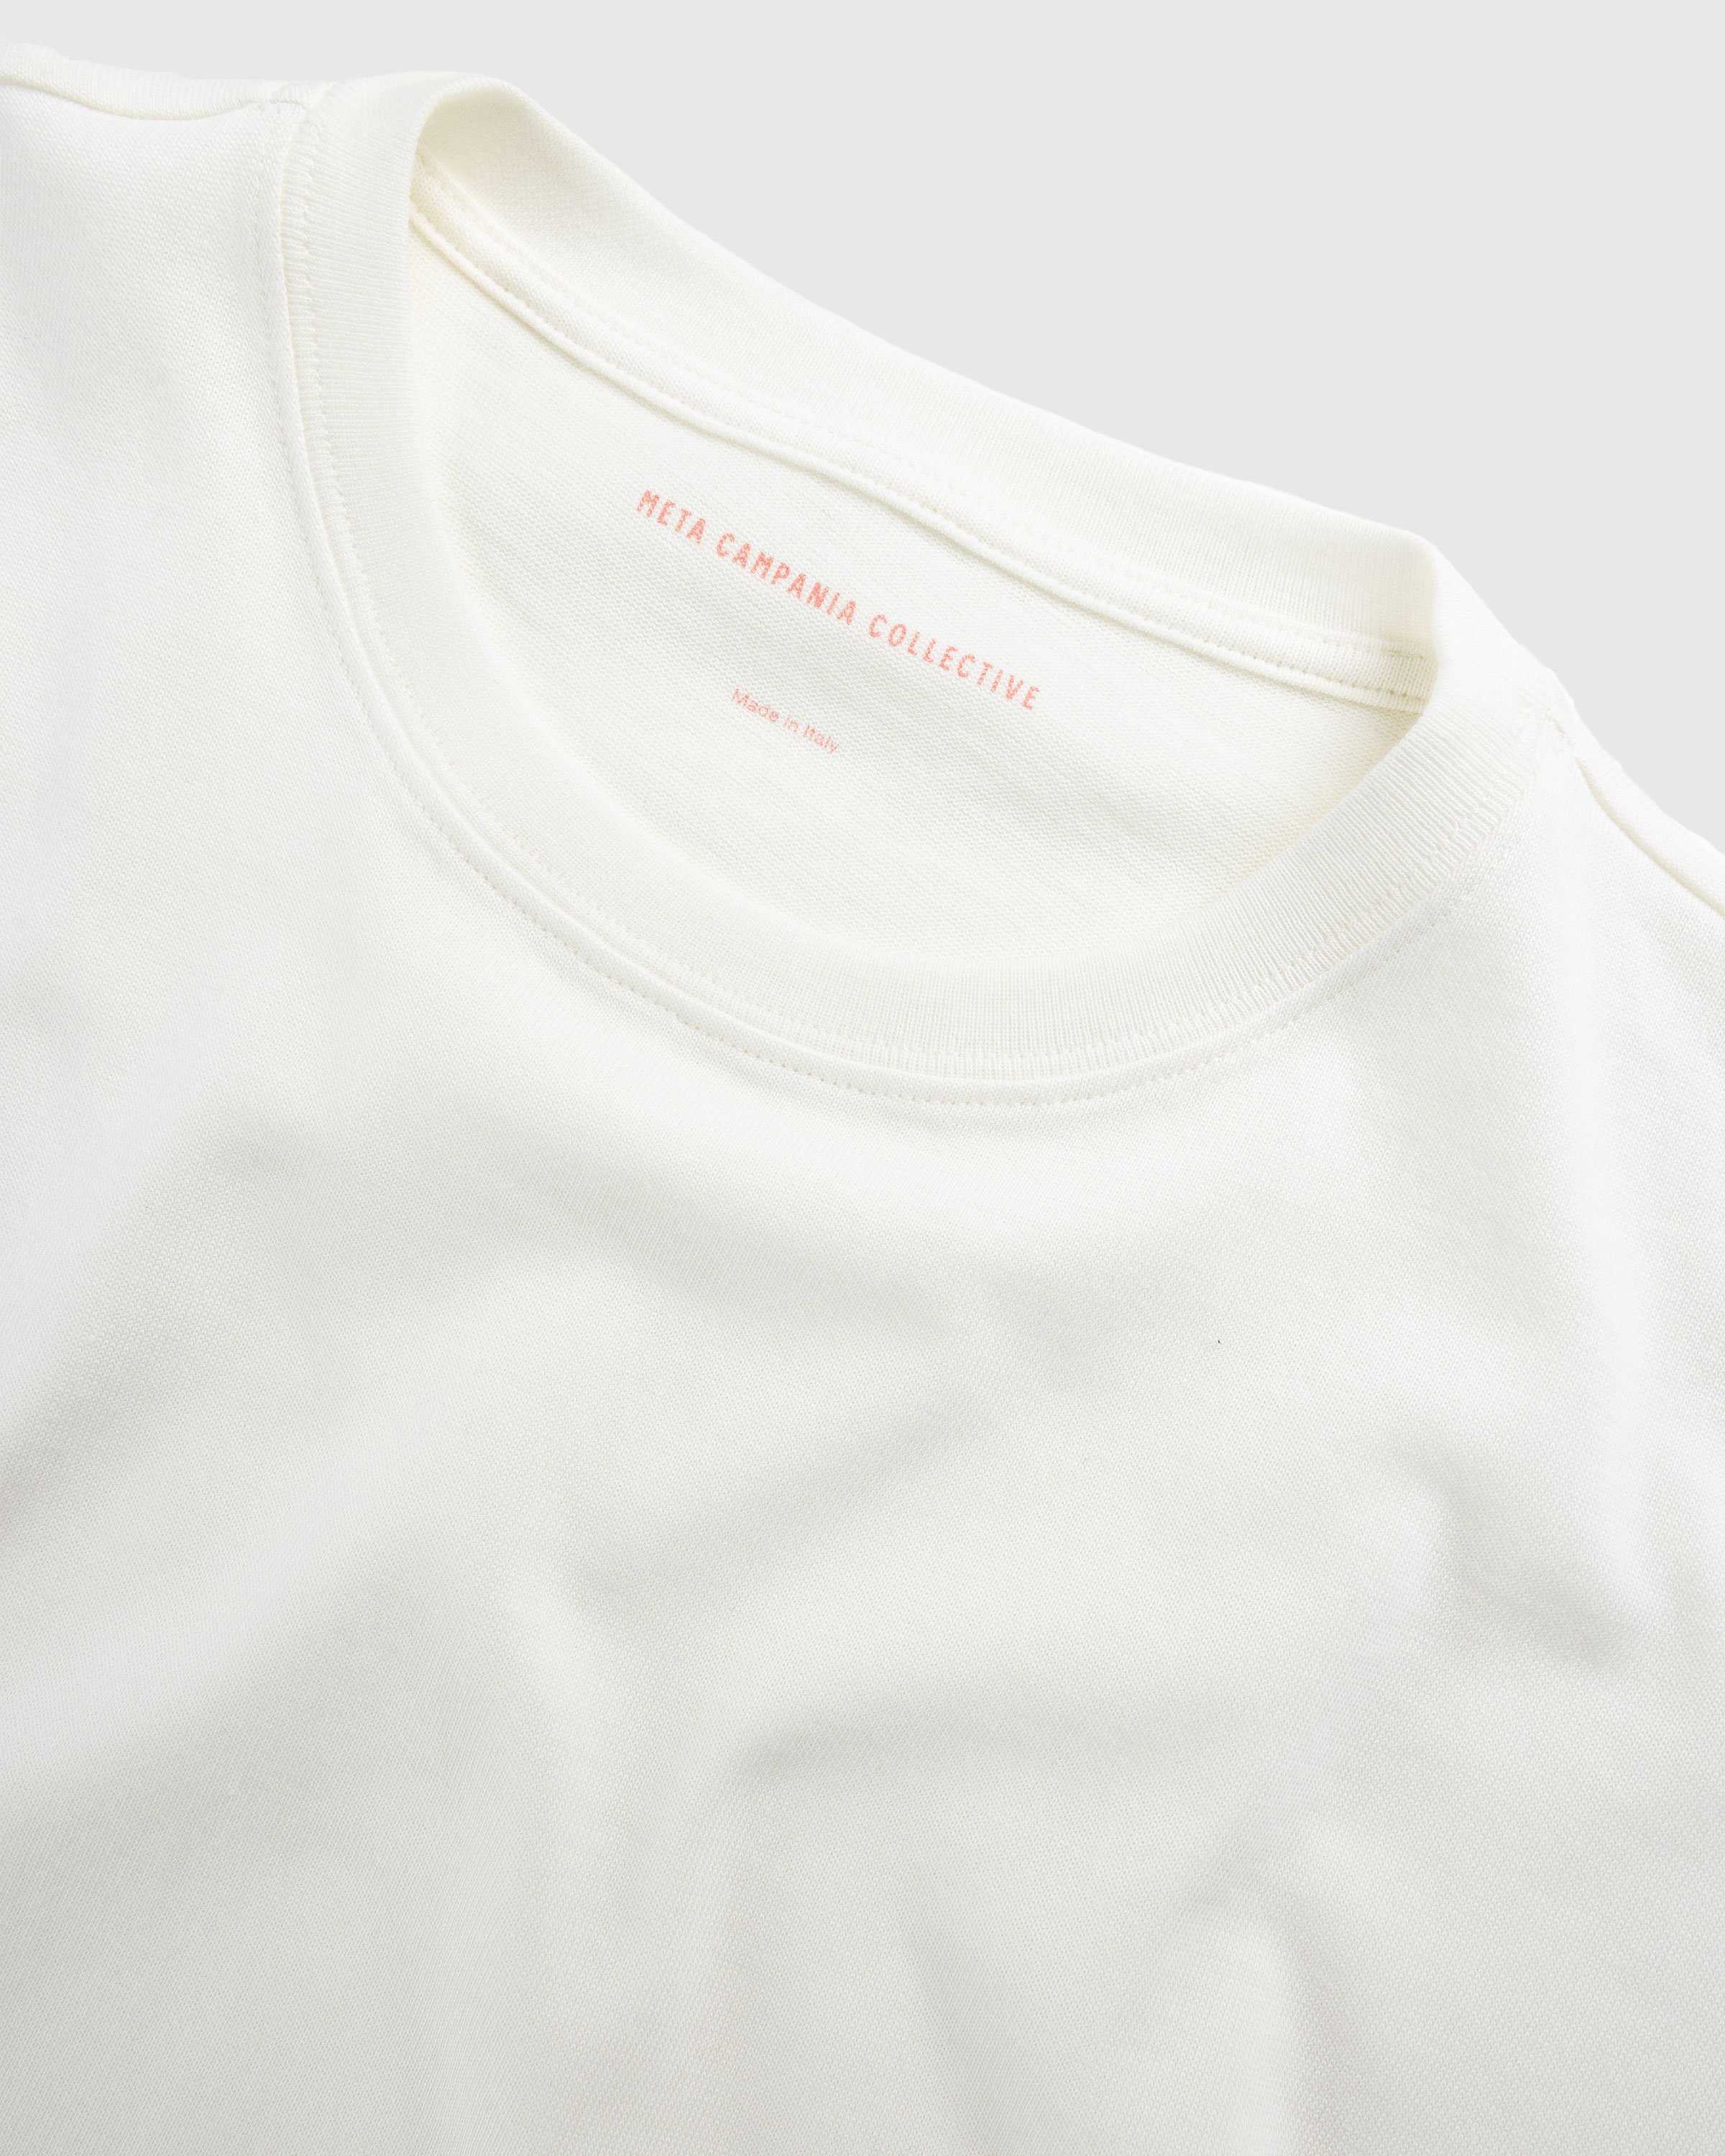 Meta Campania Collective - Nat Jersey Cotton Surfer T Shirt White - Clothing - White - Image 6